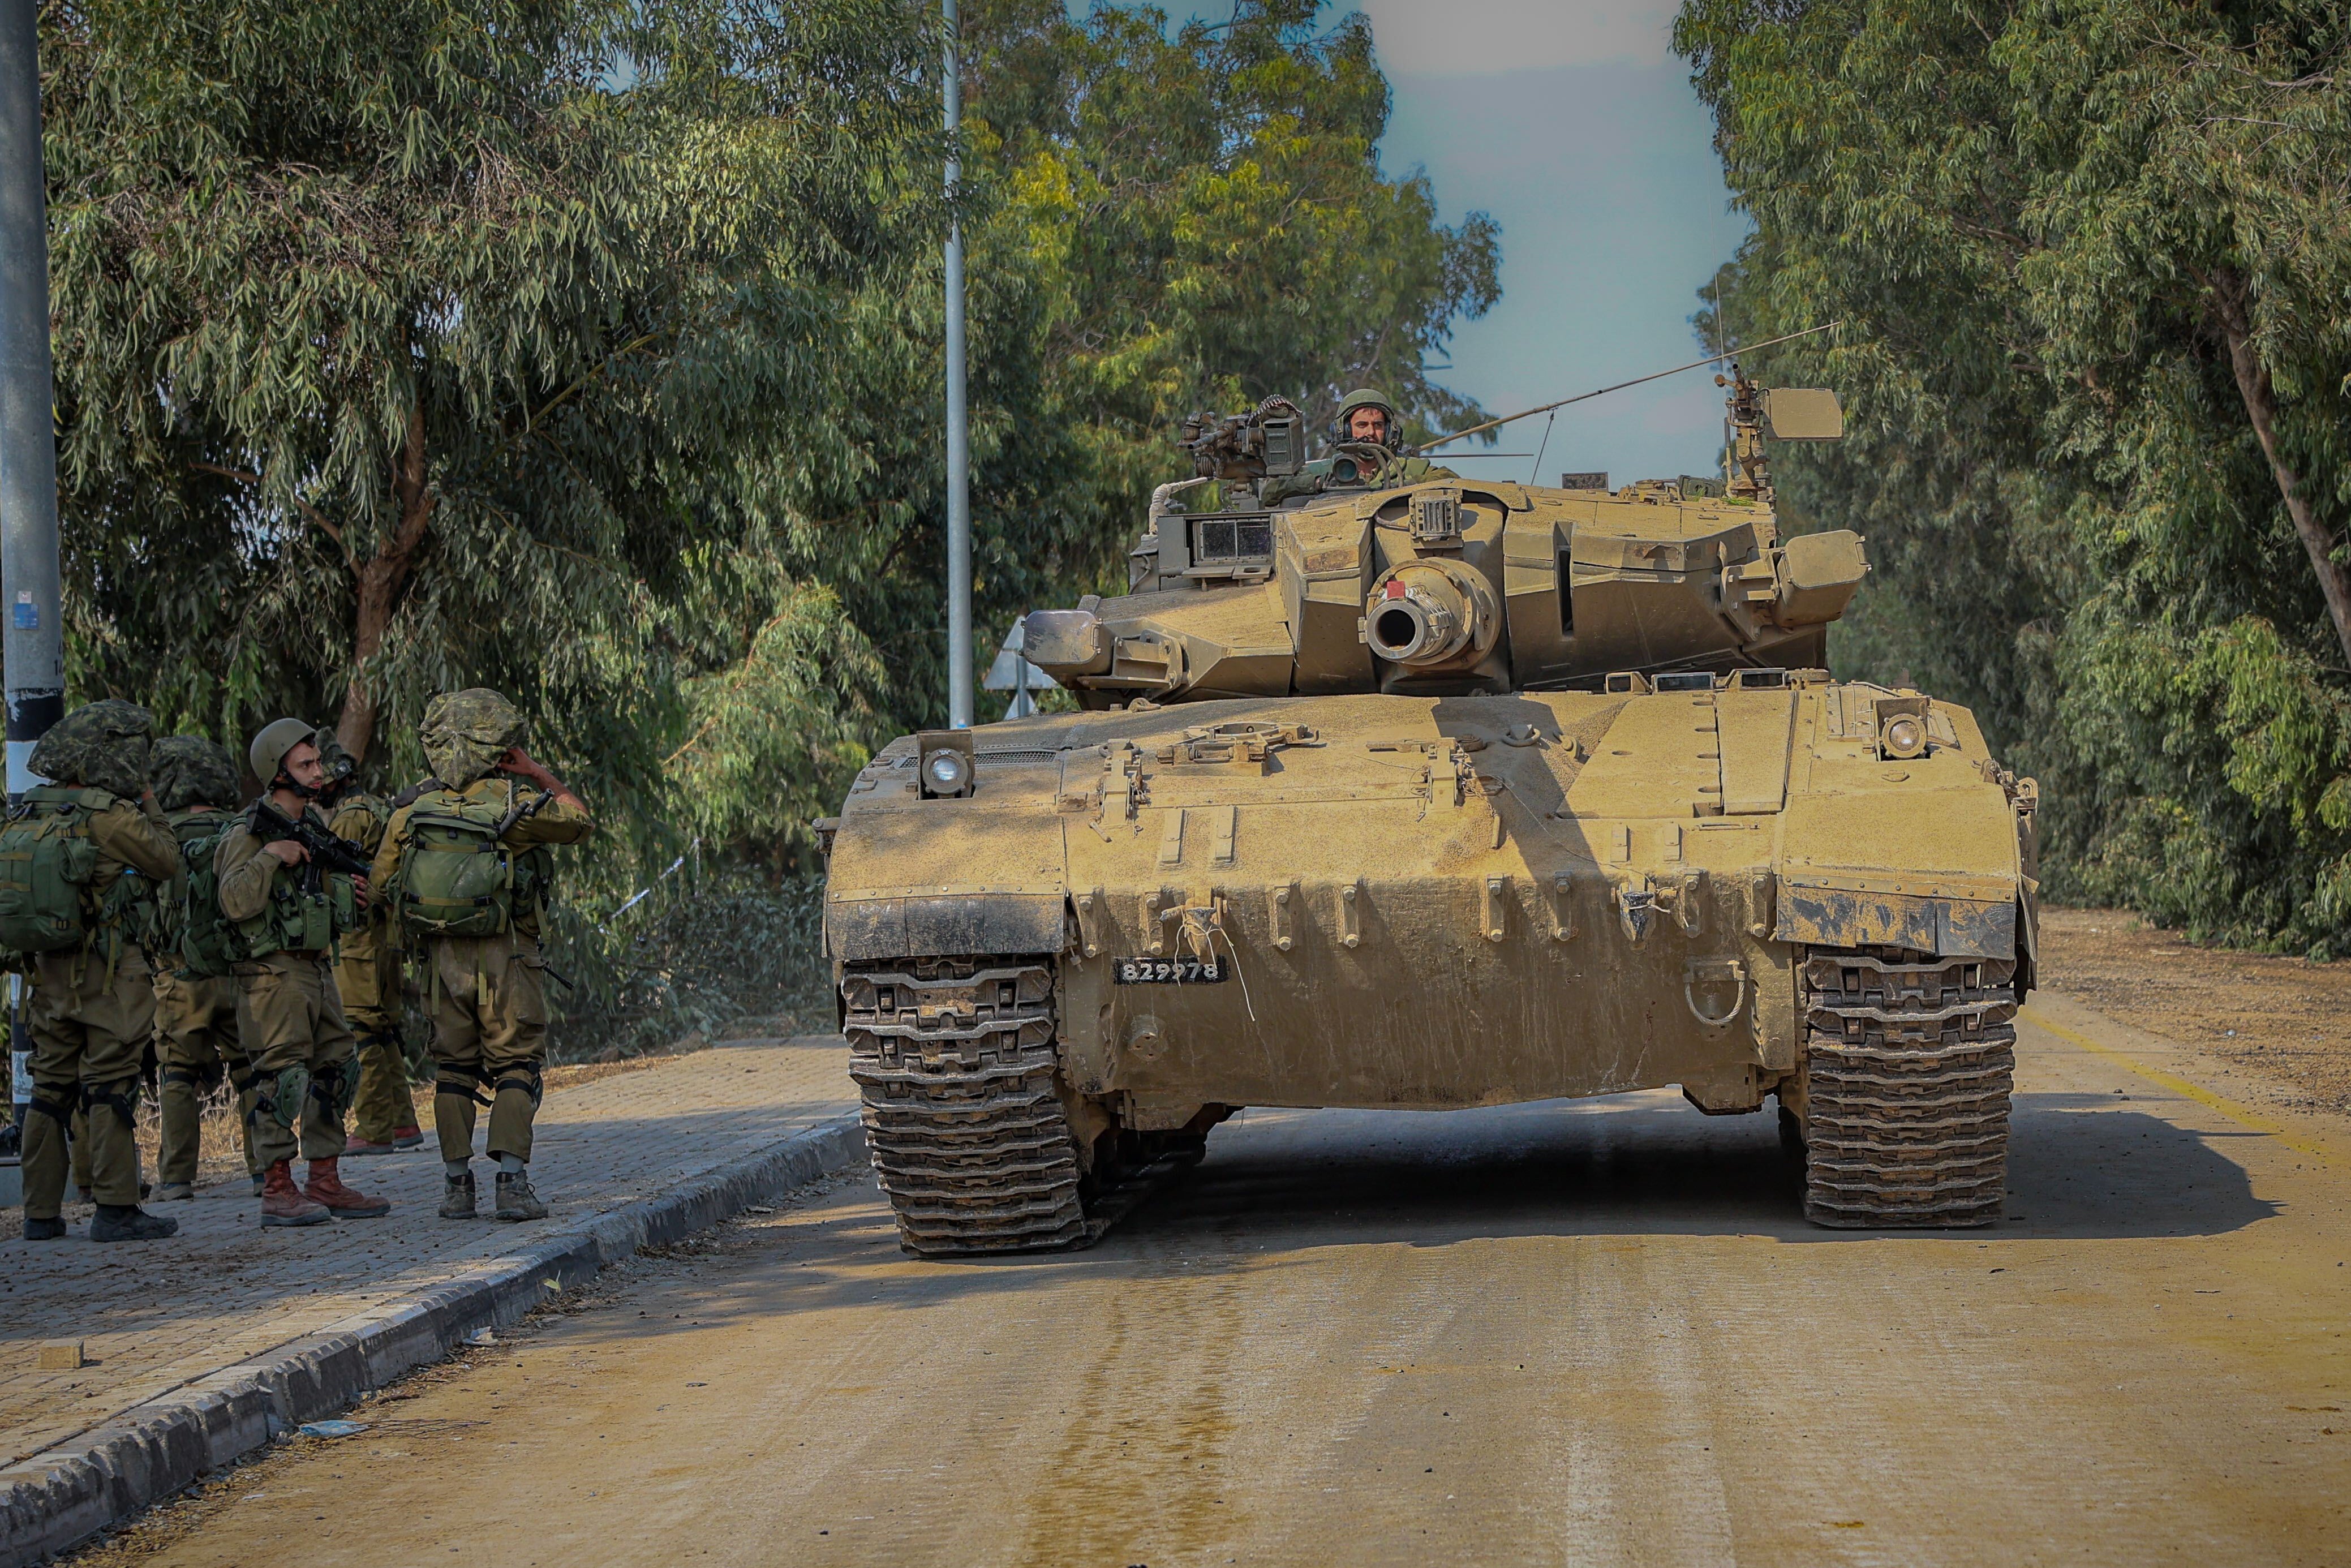 An Israeli tank and soldiers in Kfar Aza